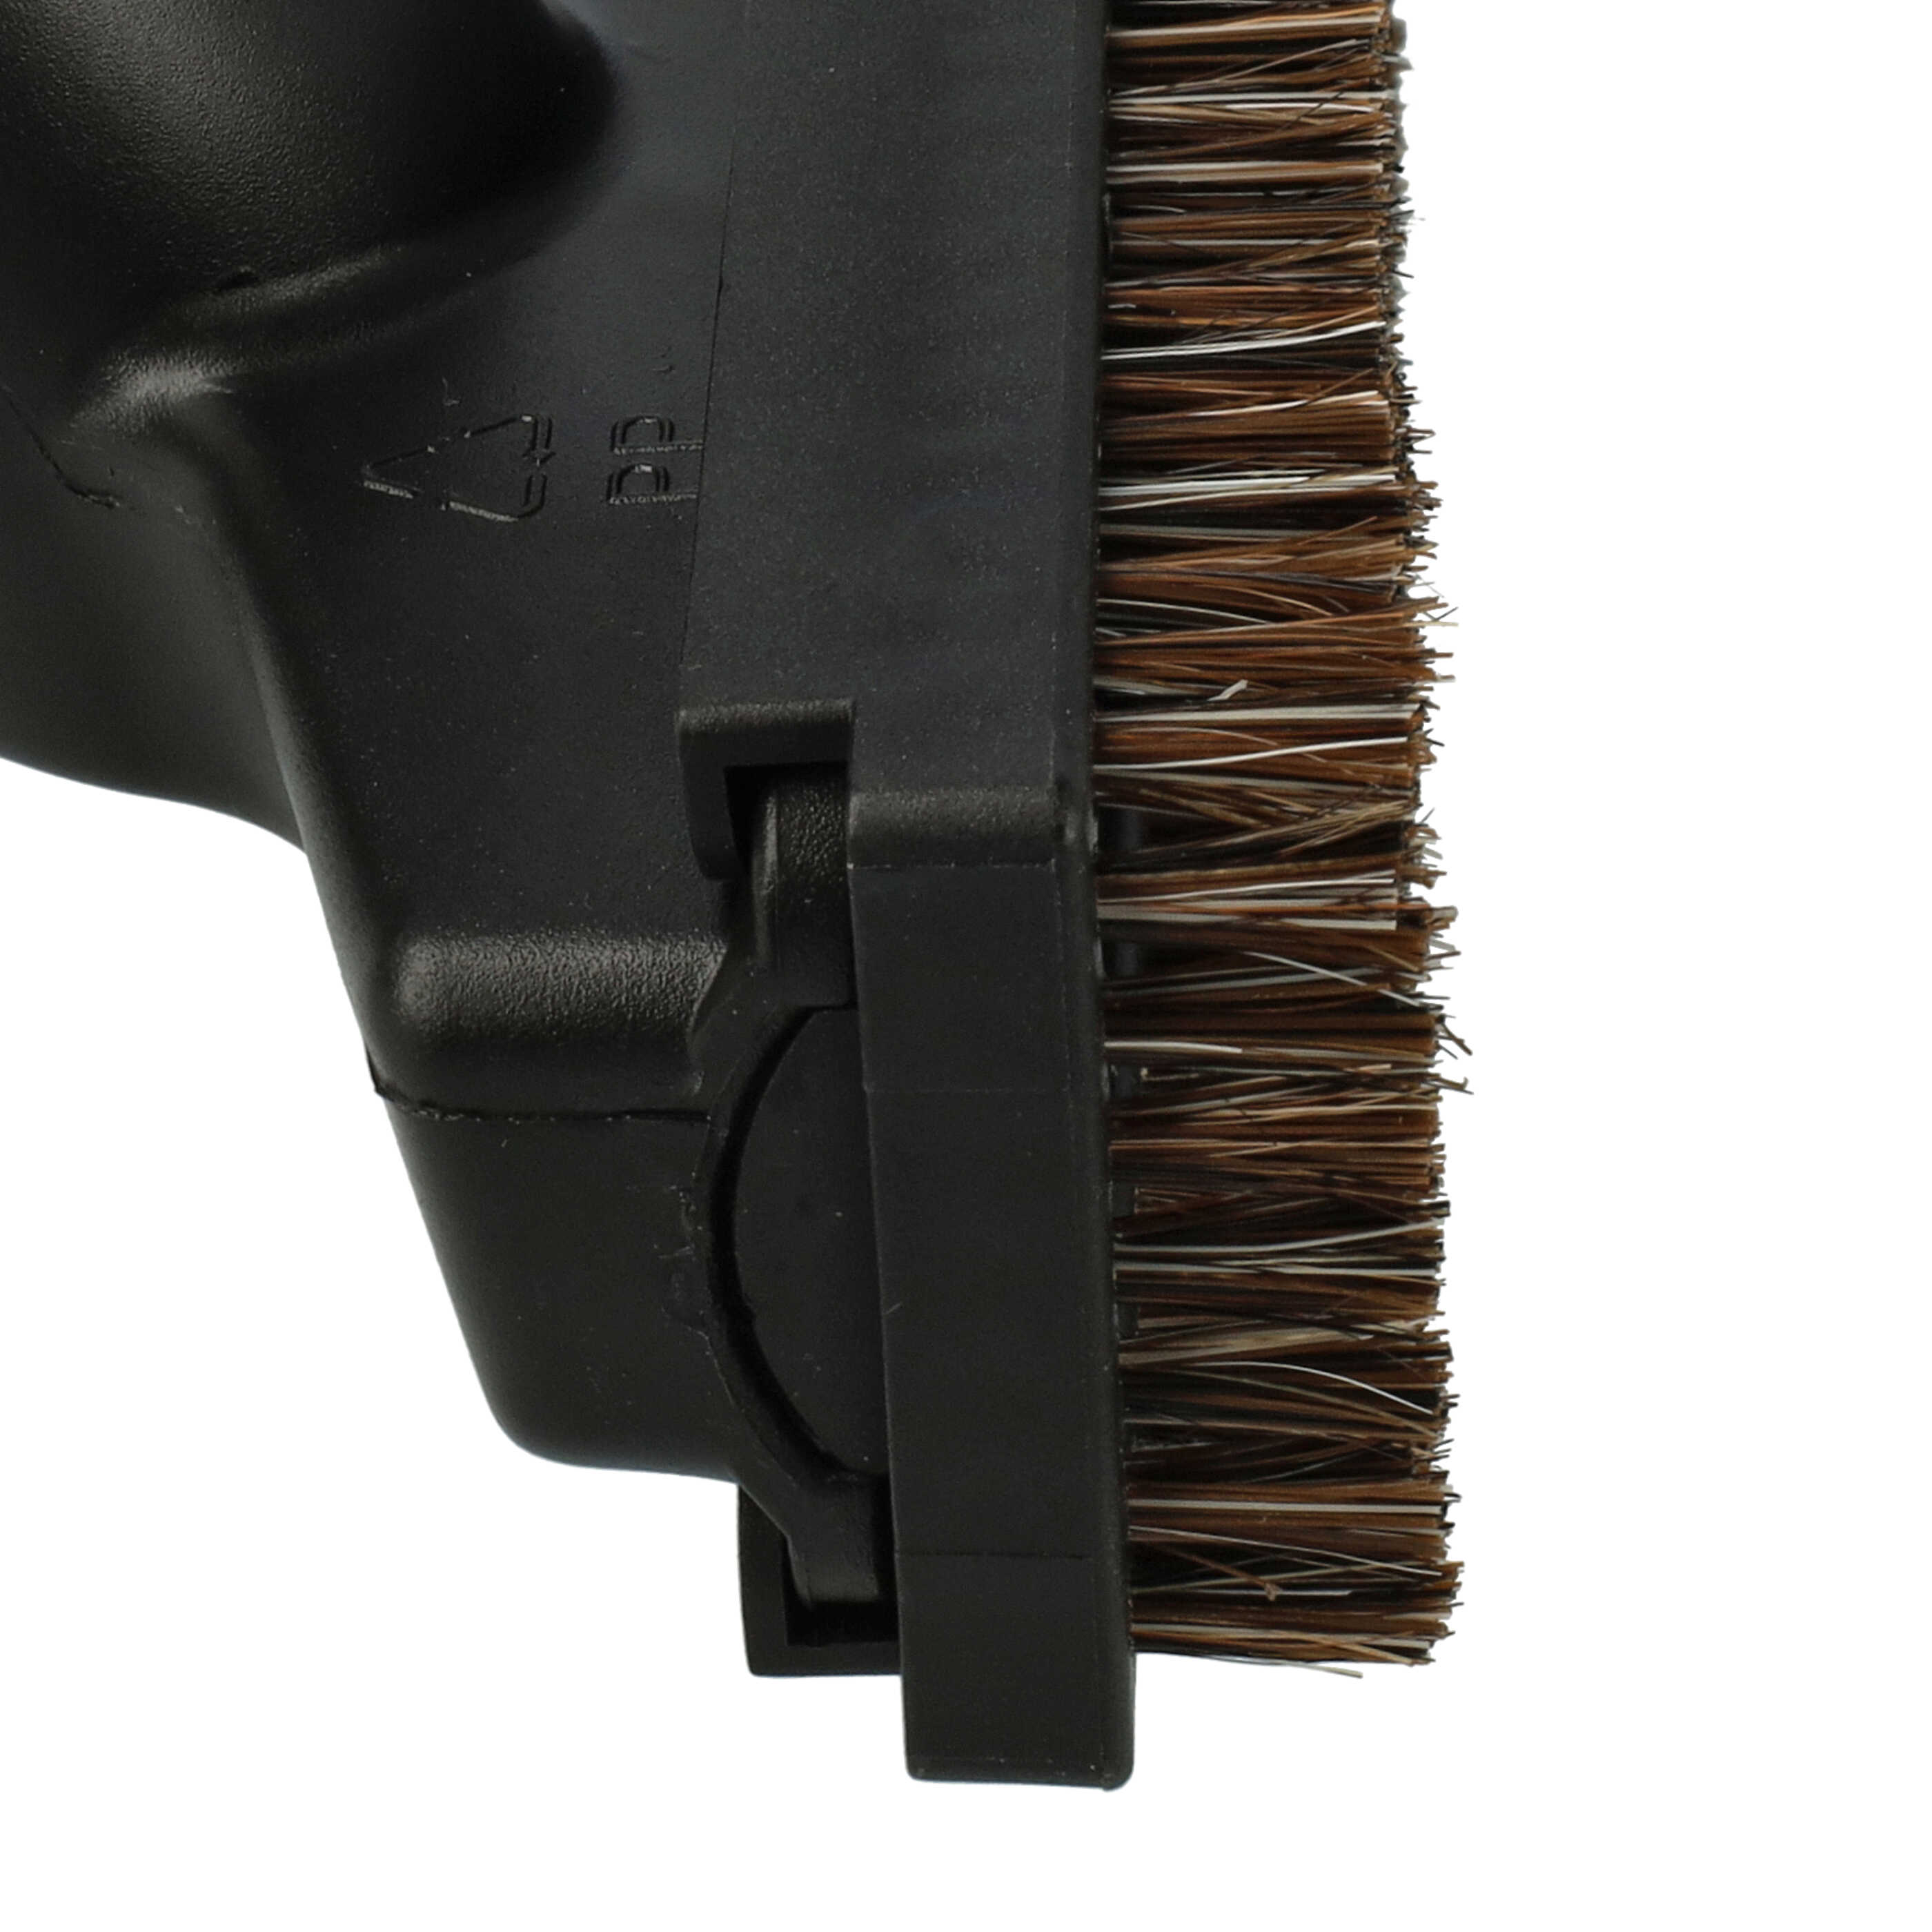 Vacuum Cleaner Floor Nozzle as Replacement for Bosch Brush 2 609 256 F25, 14 cm